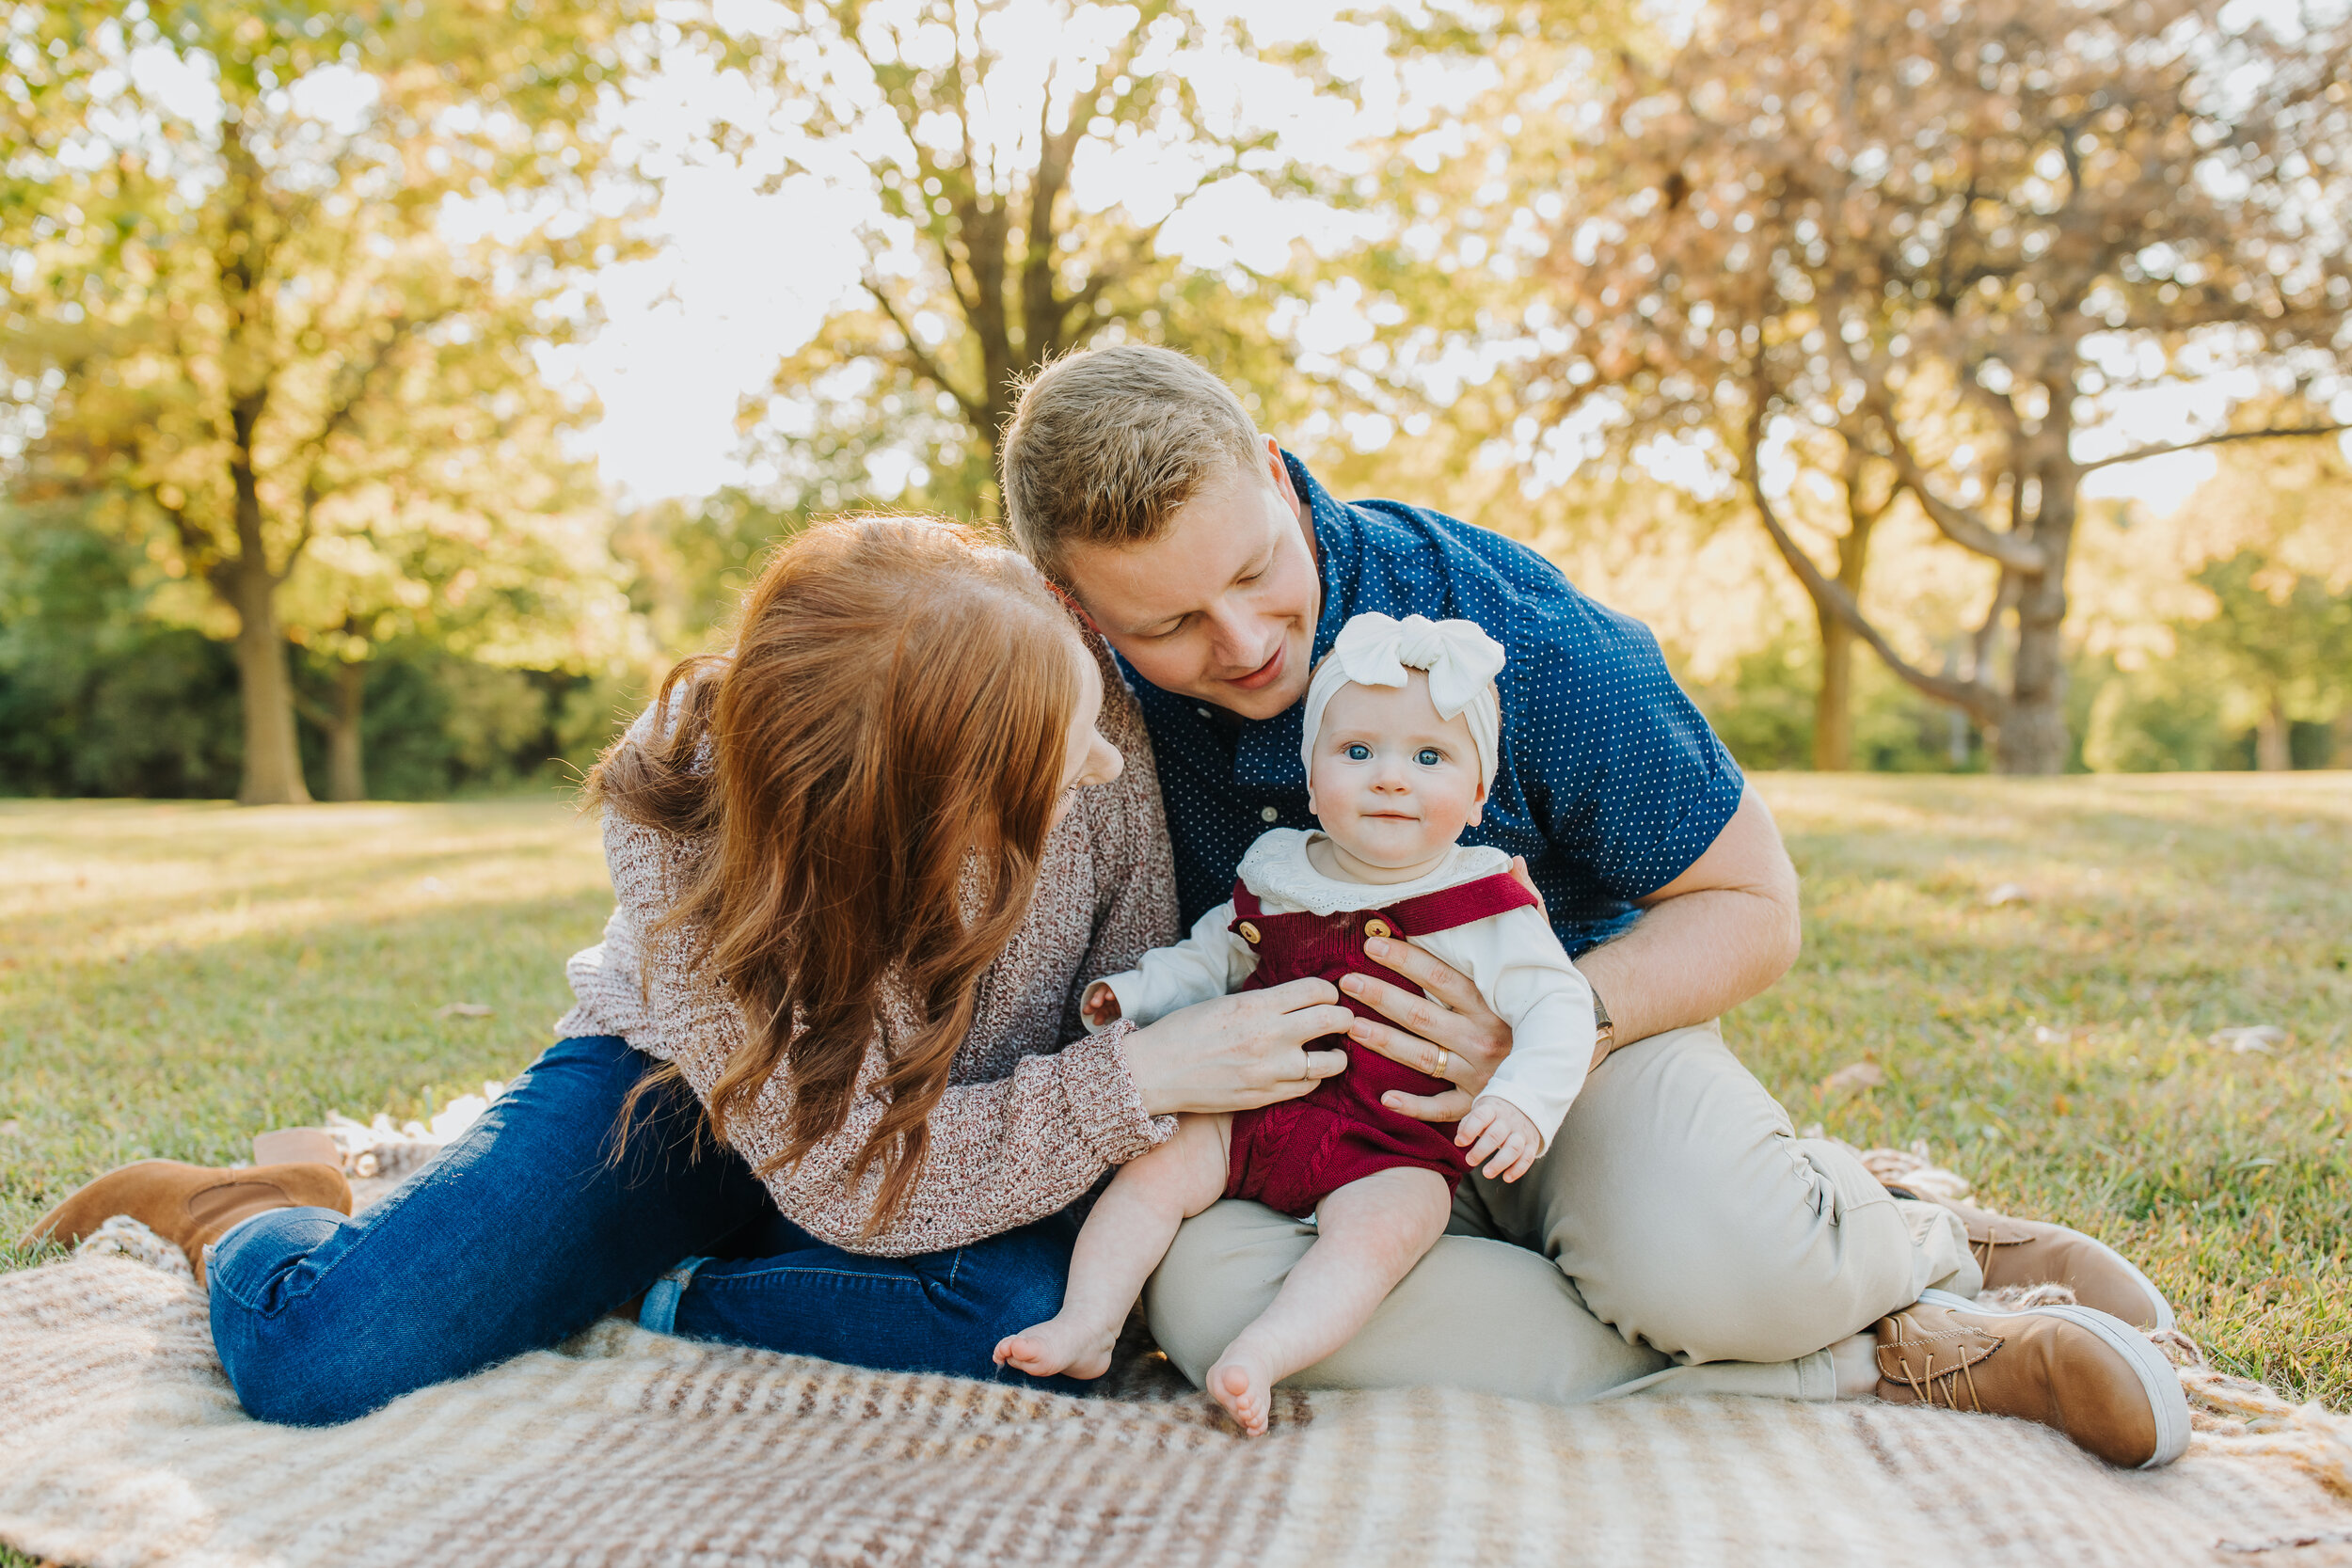 Unger Family Photos 2020 - Nathaniel Jensen Photography - Omaha Nebraska Family Photographer-62.jpg